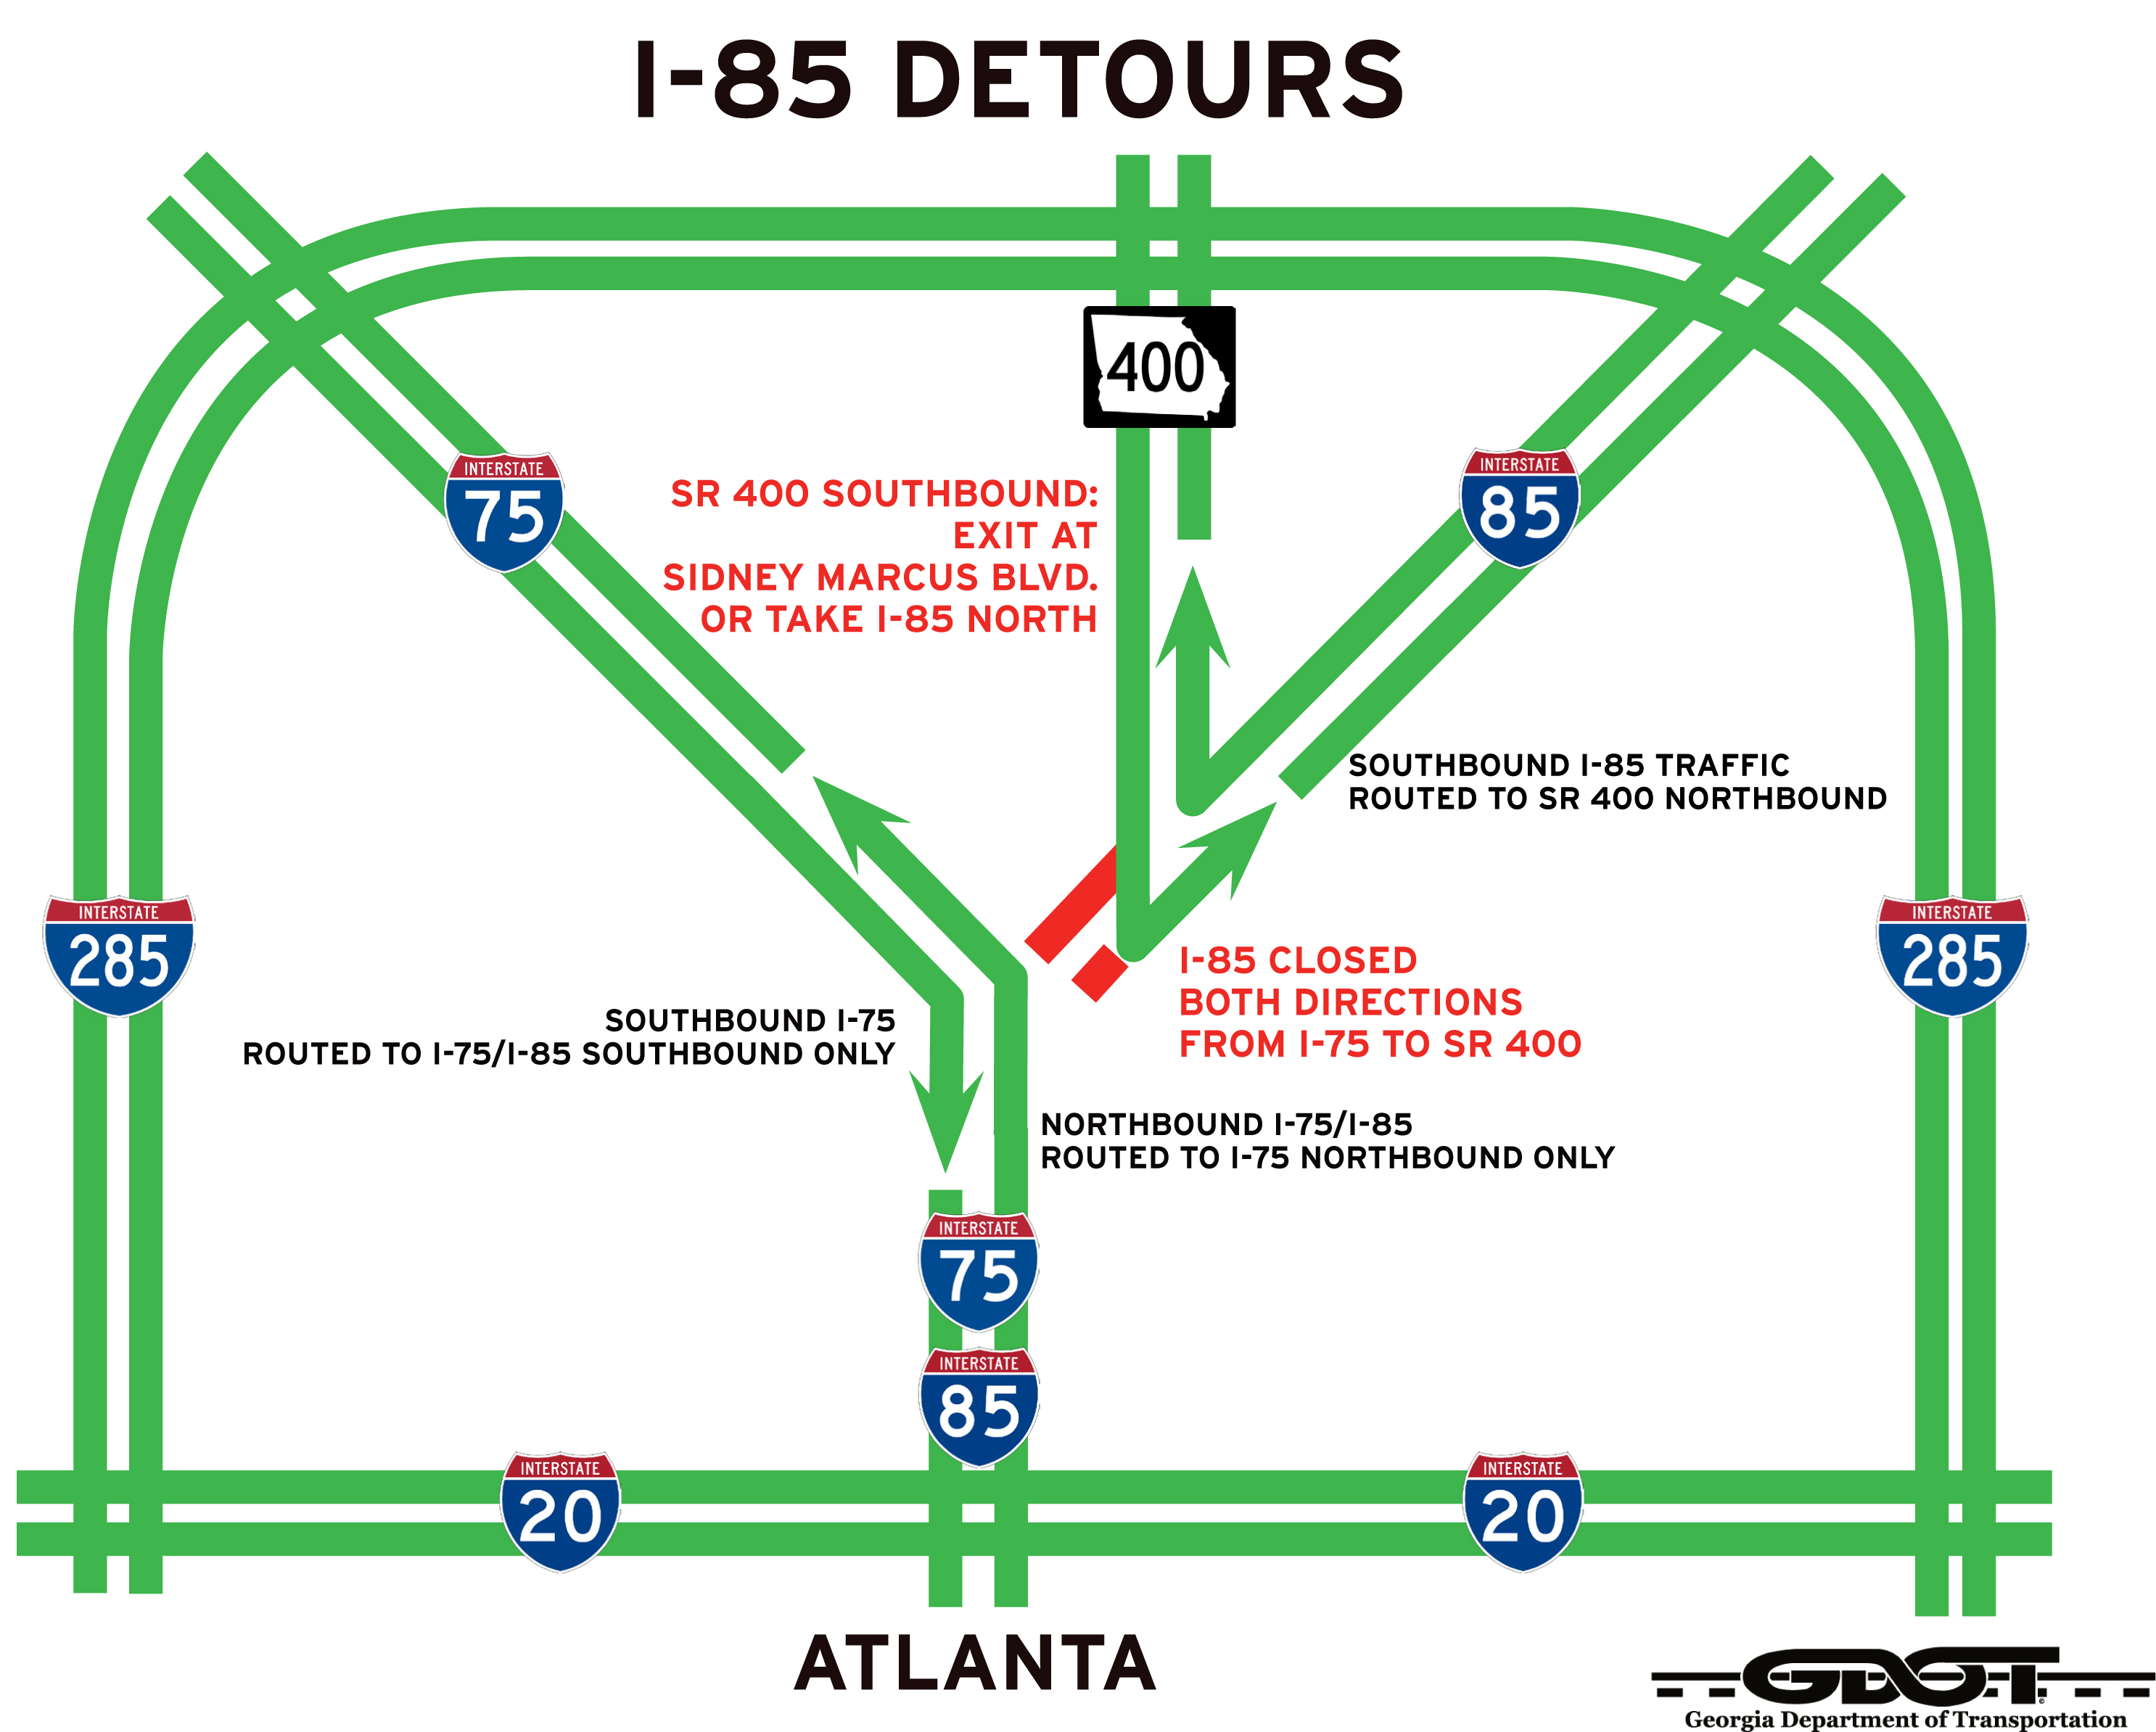 Map of detours for Interstate 85 in Atlanta